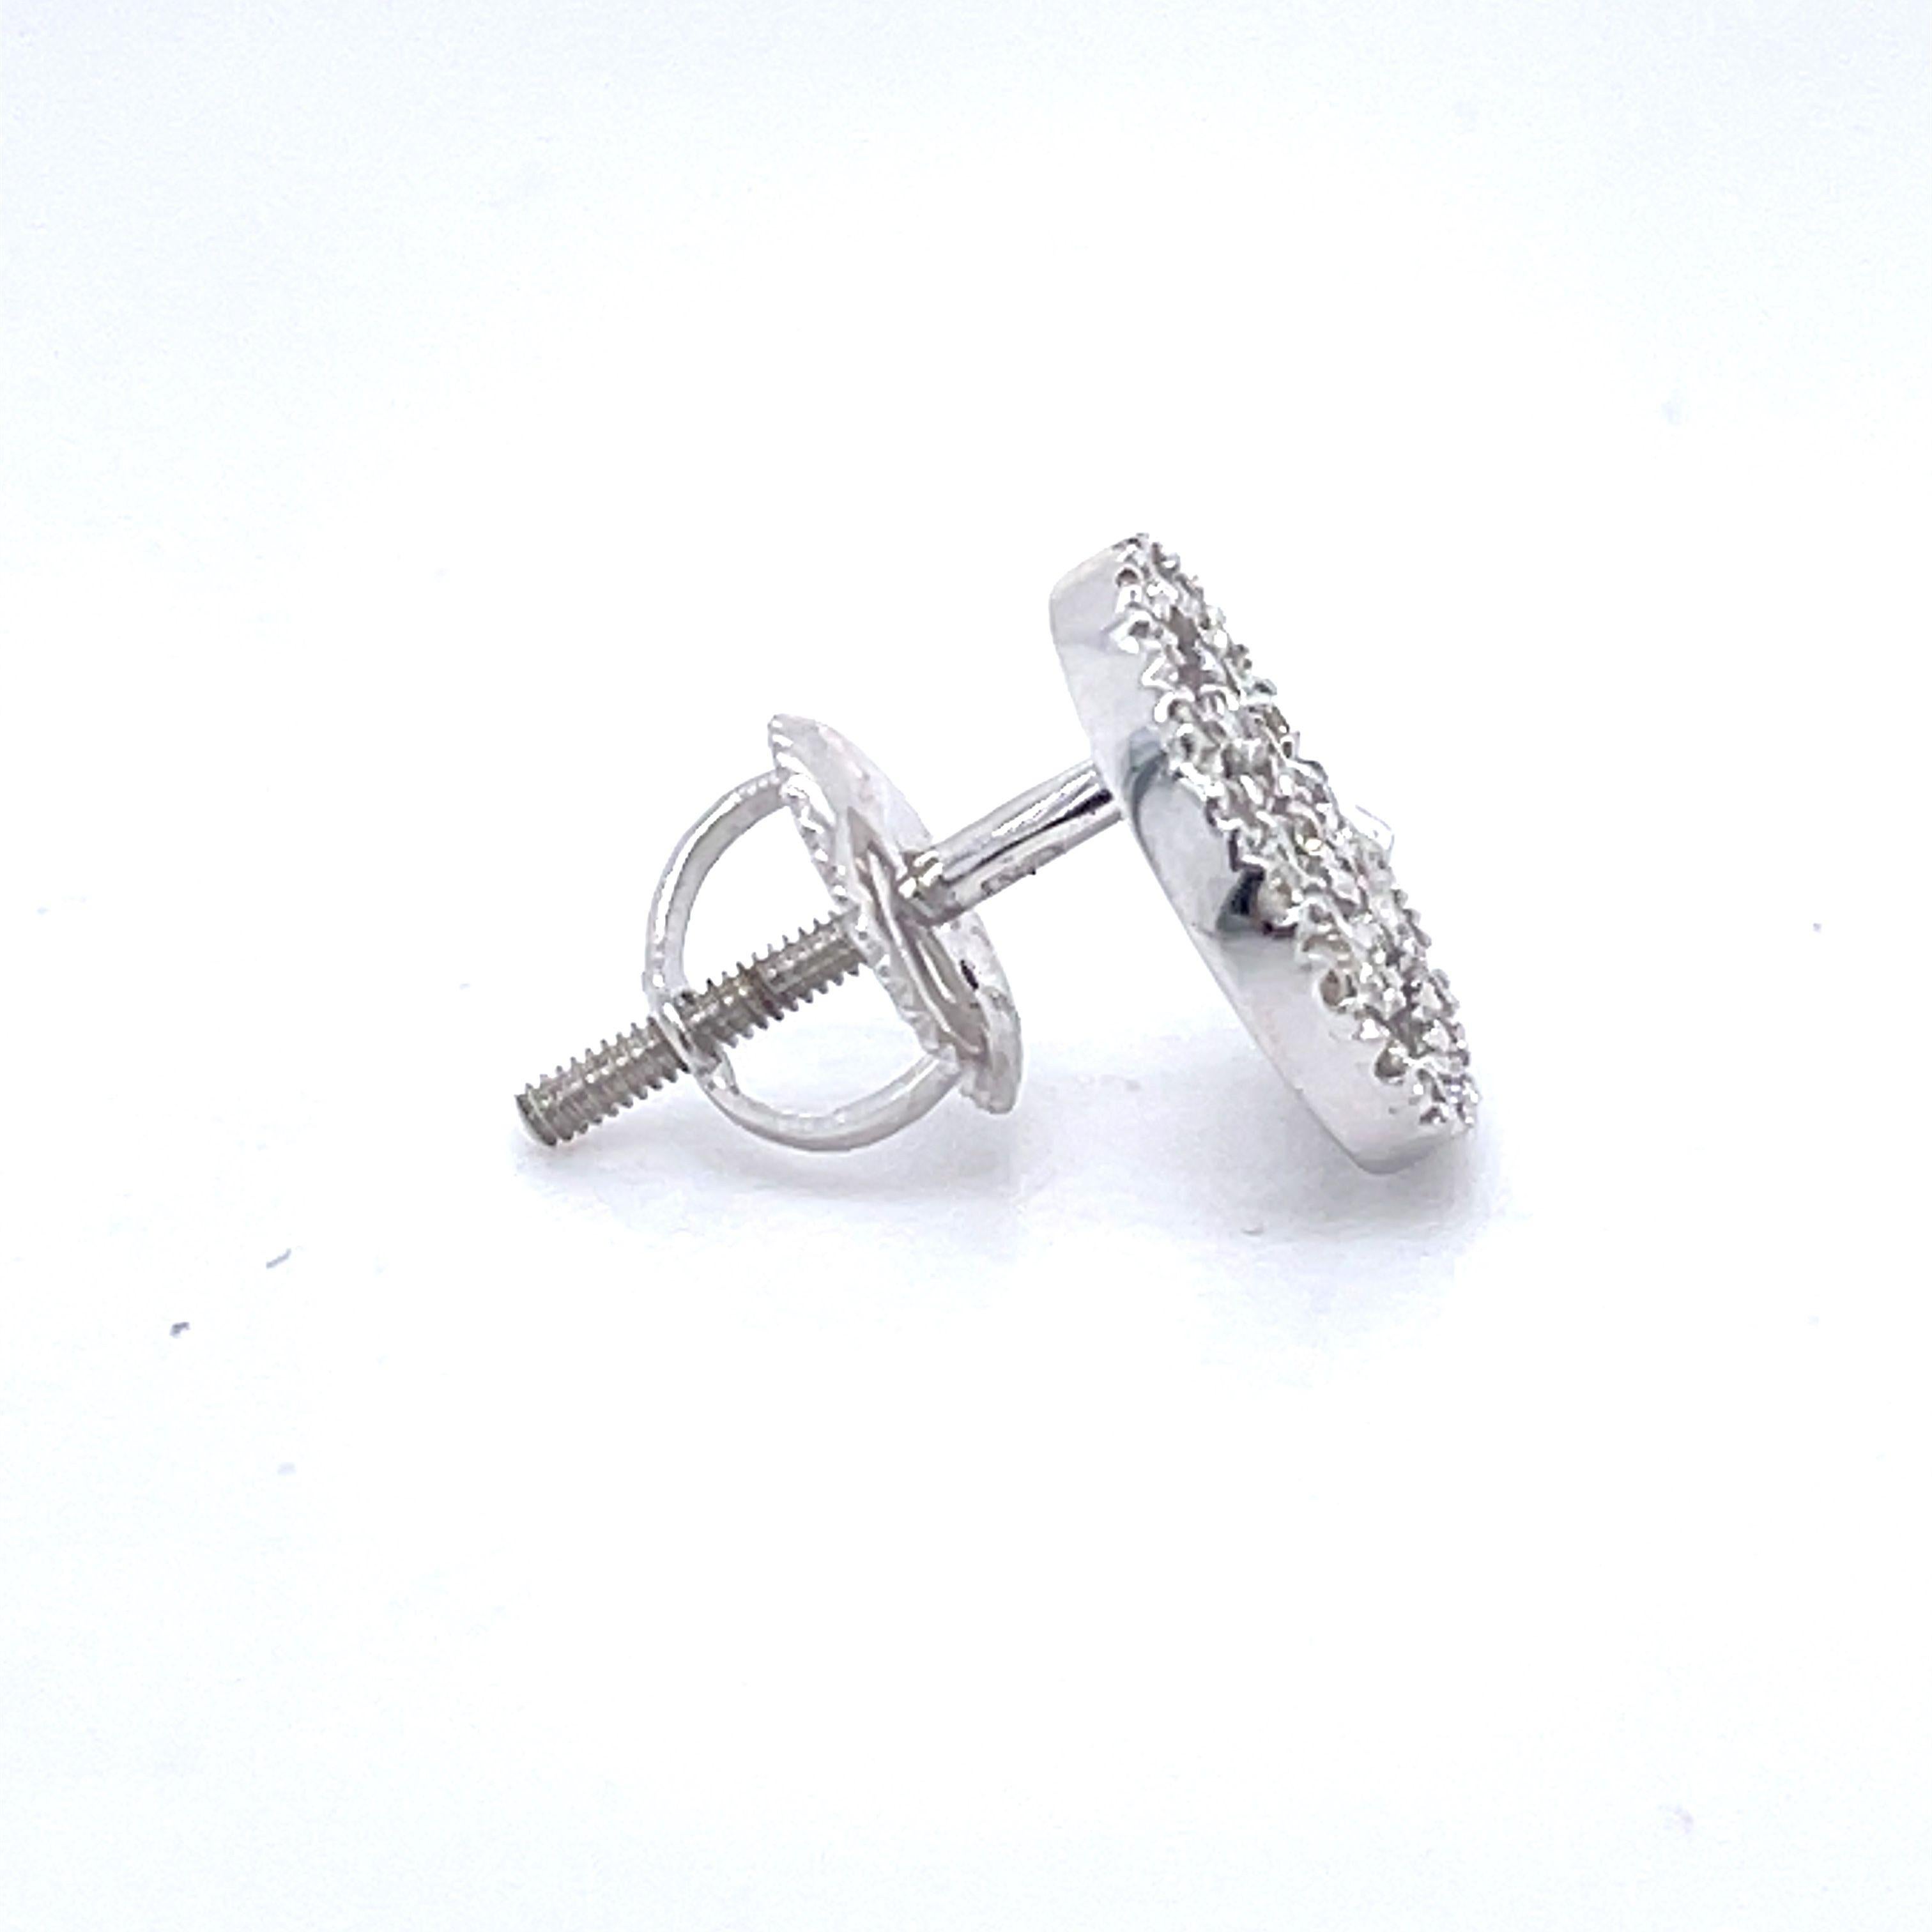 Contemporary Earrings, Black&White Diamonds, 14k White Gold, Unisex One of a Kind Earrings